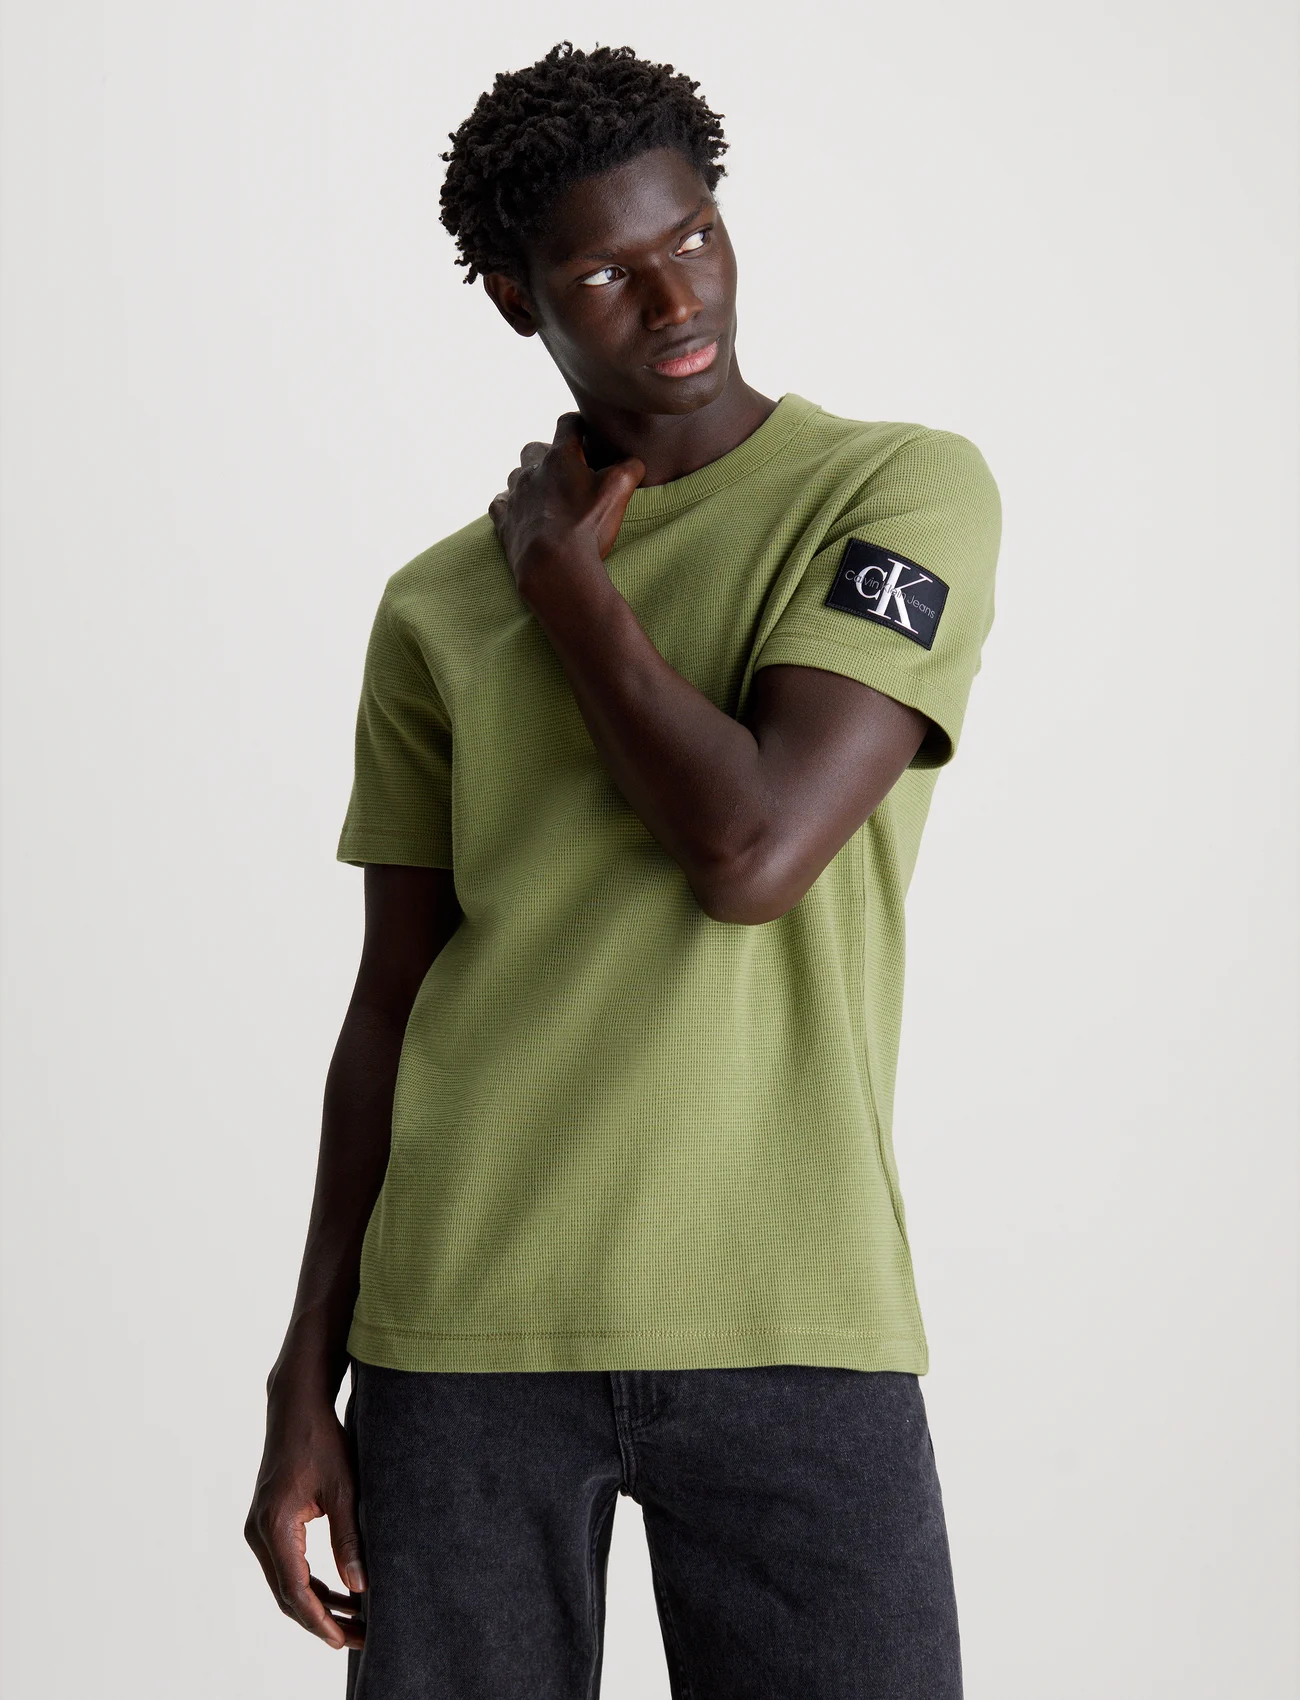 Calvin Klein Jeans - BADGE WAFFLE TEE - basic t-shirts - dark juniper - 1